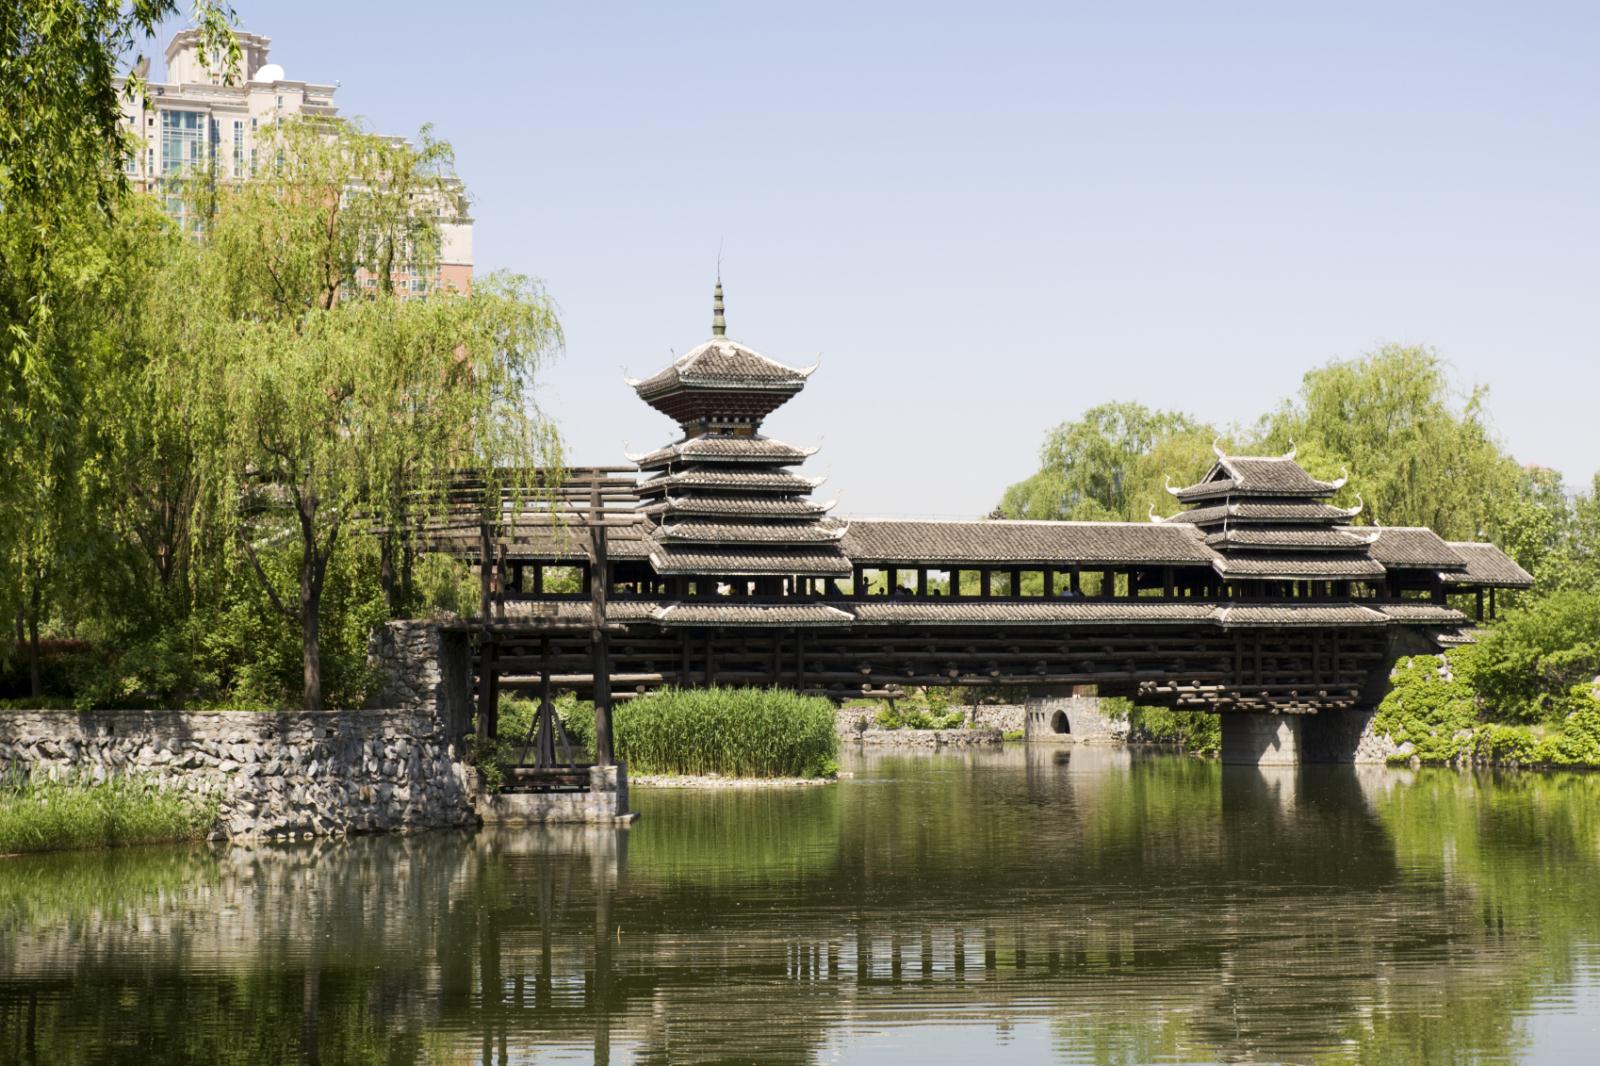 Bridge in the Botanical Gardens - A long weekend in Beijing